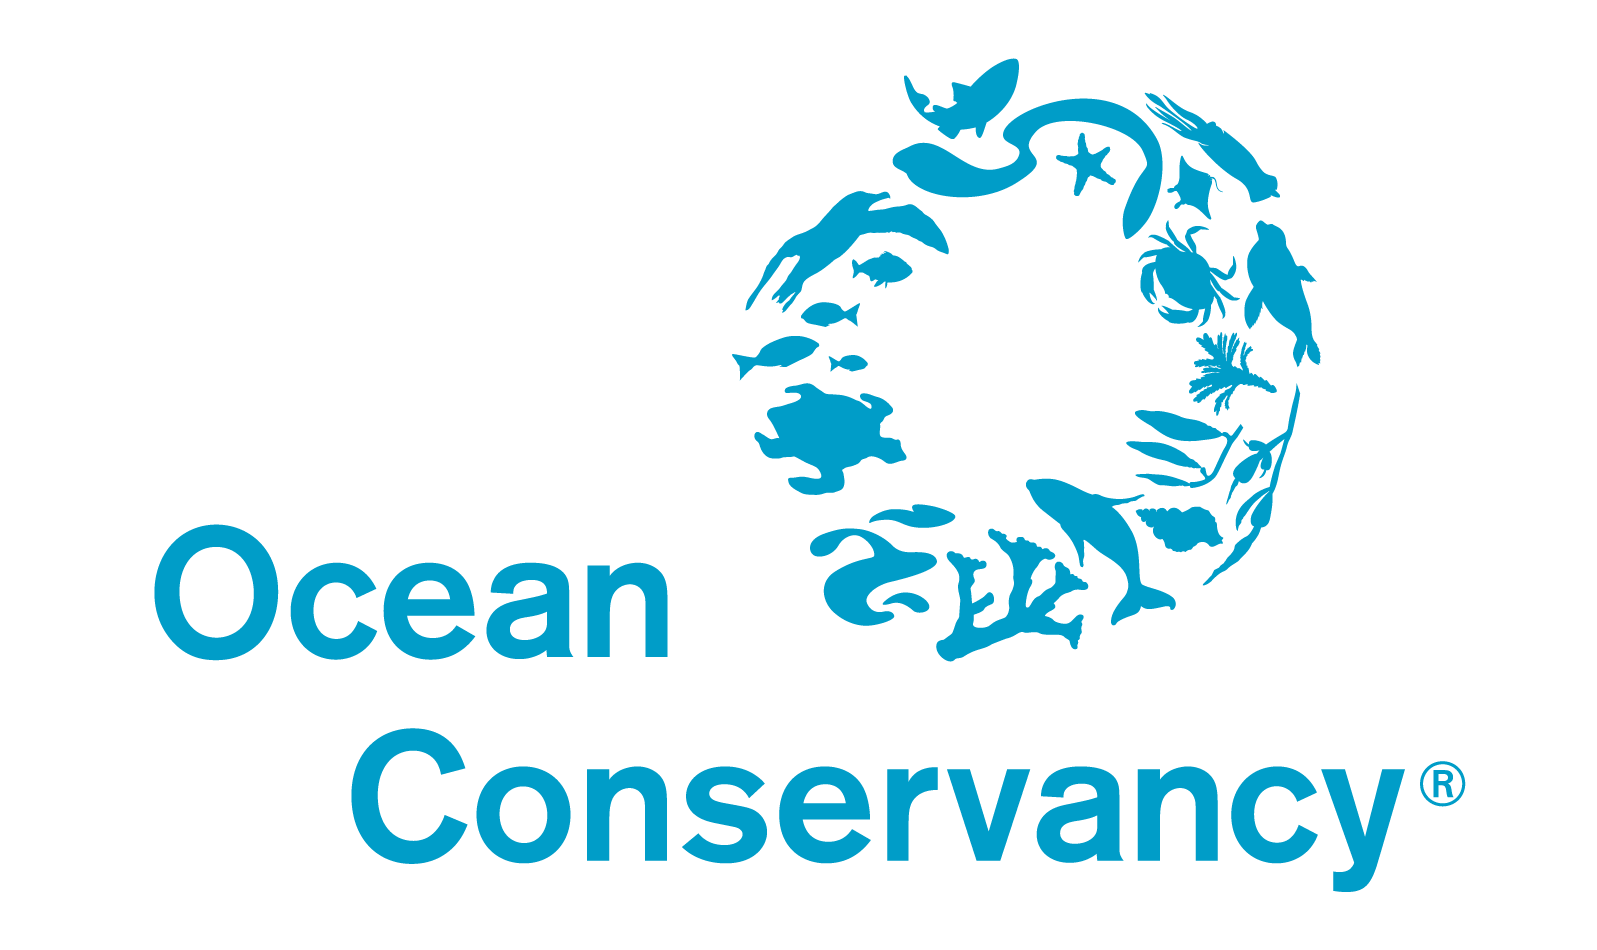 Ocean-Conservancy-Photo-Contest